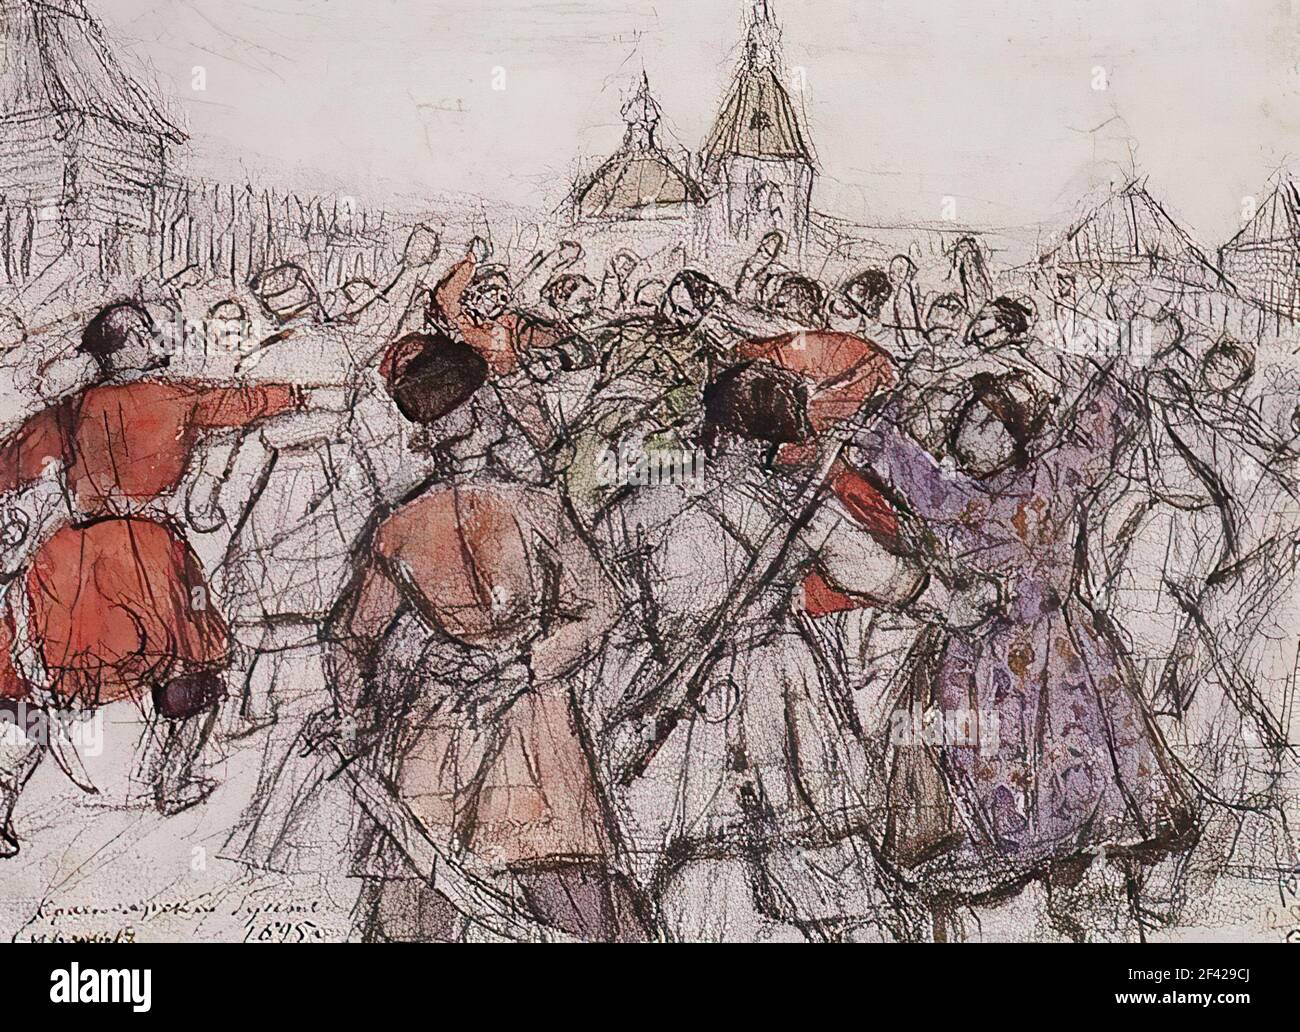 Красноярский бунт 1695 года